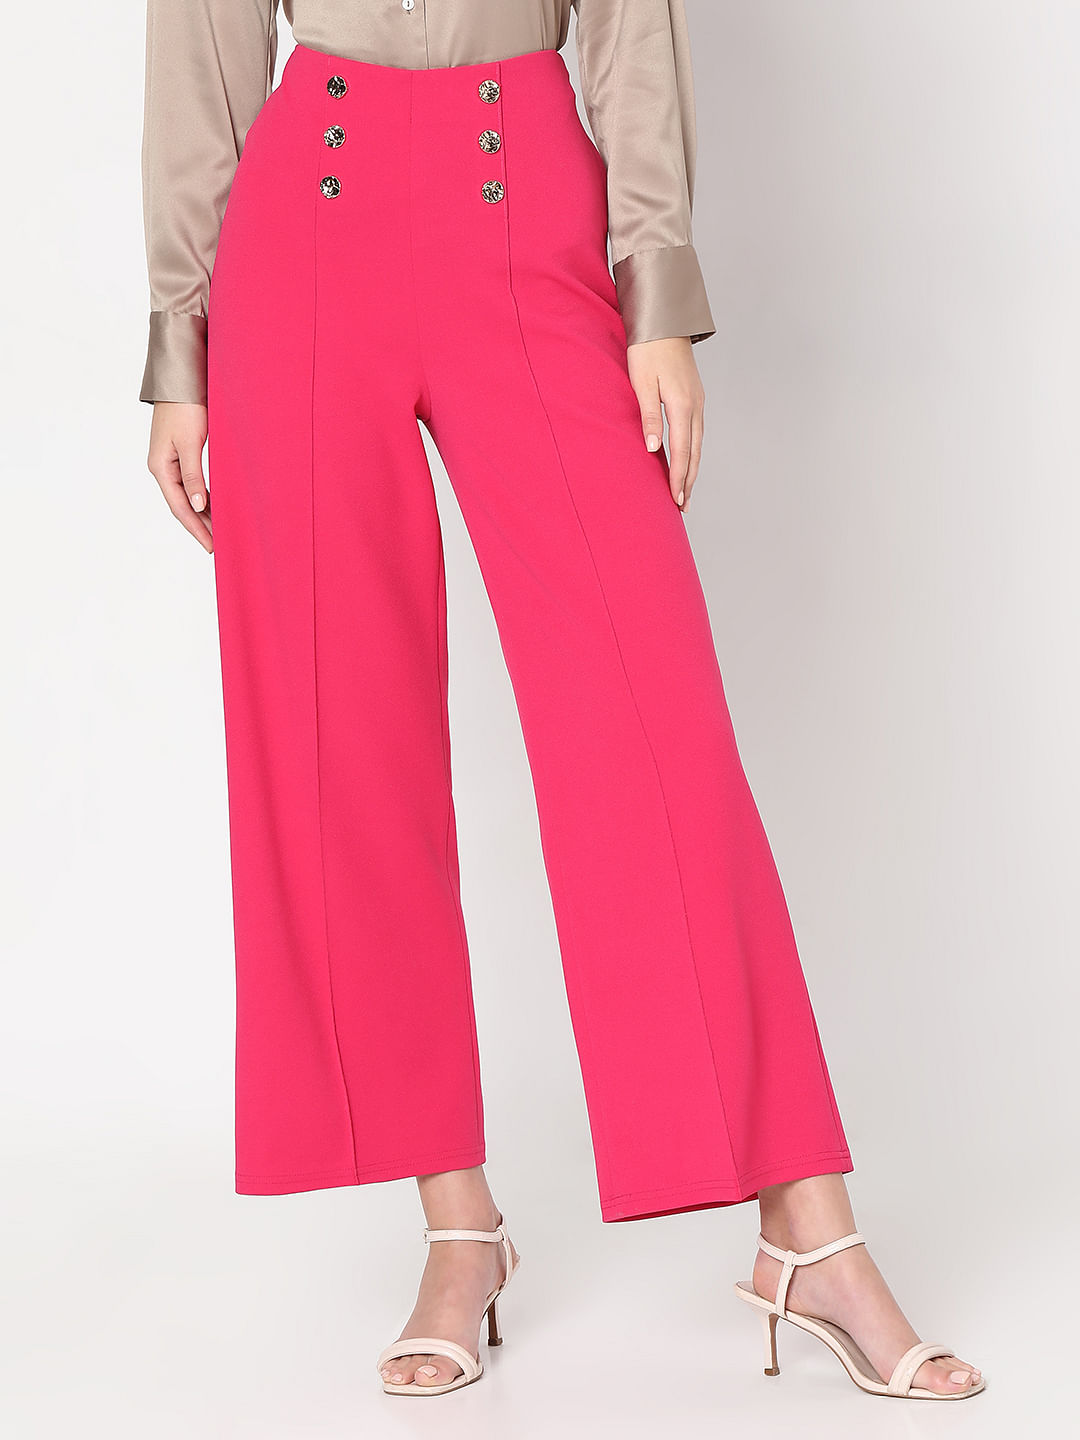 Beryll Silk Pants Lena | Hot Pink - +Beryll Worn By Good People